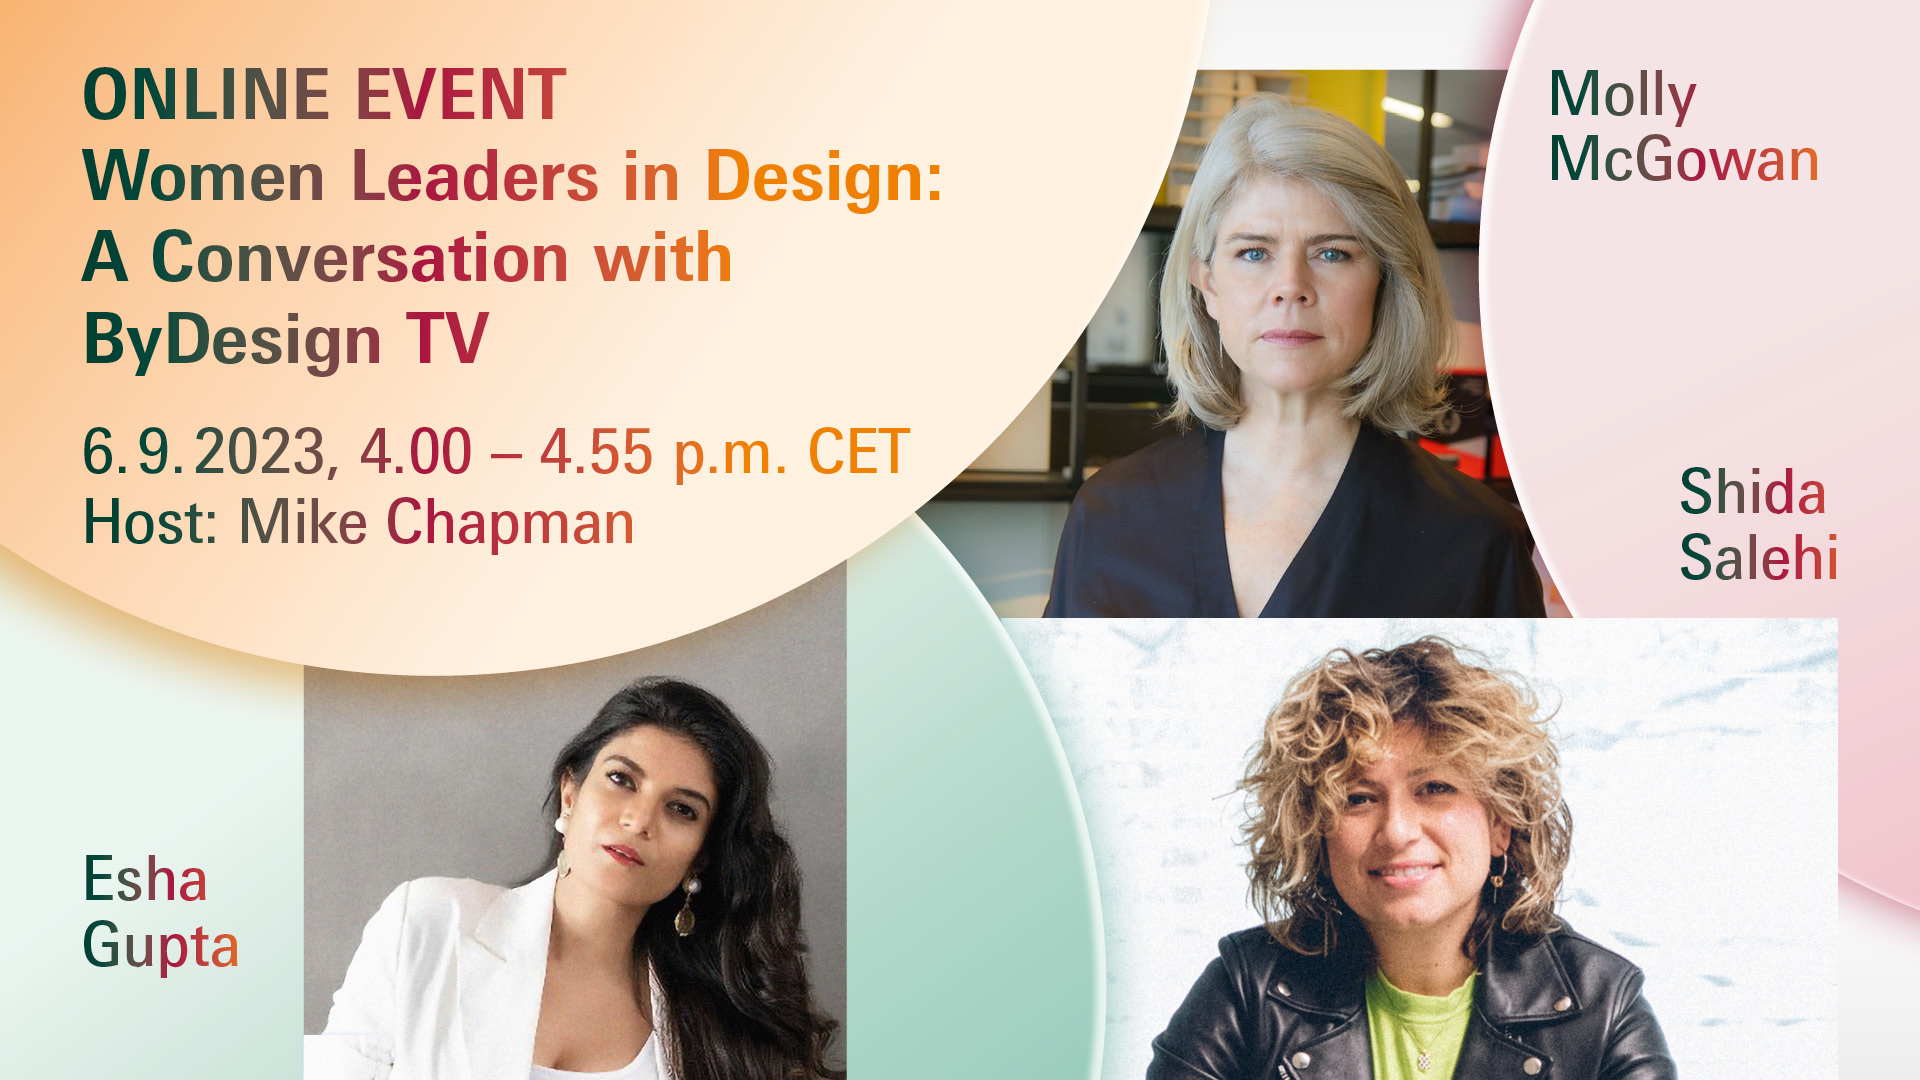 “Women Leaders in Design: A Conversation with ByDesign TV”: Esha Gupta, Molly McGowan and Shida Salehi